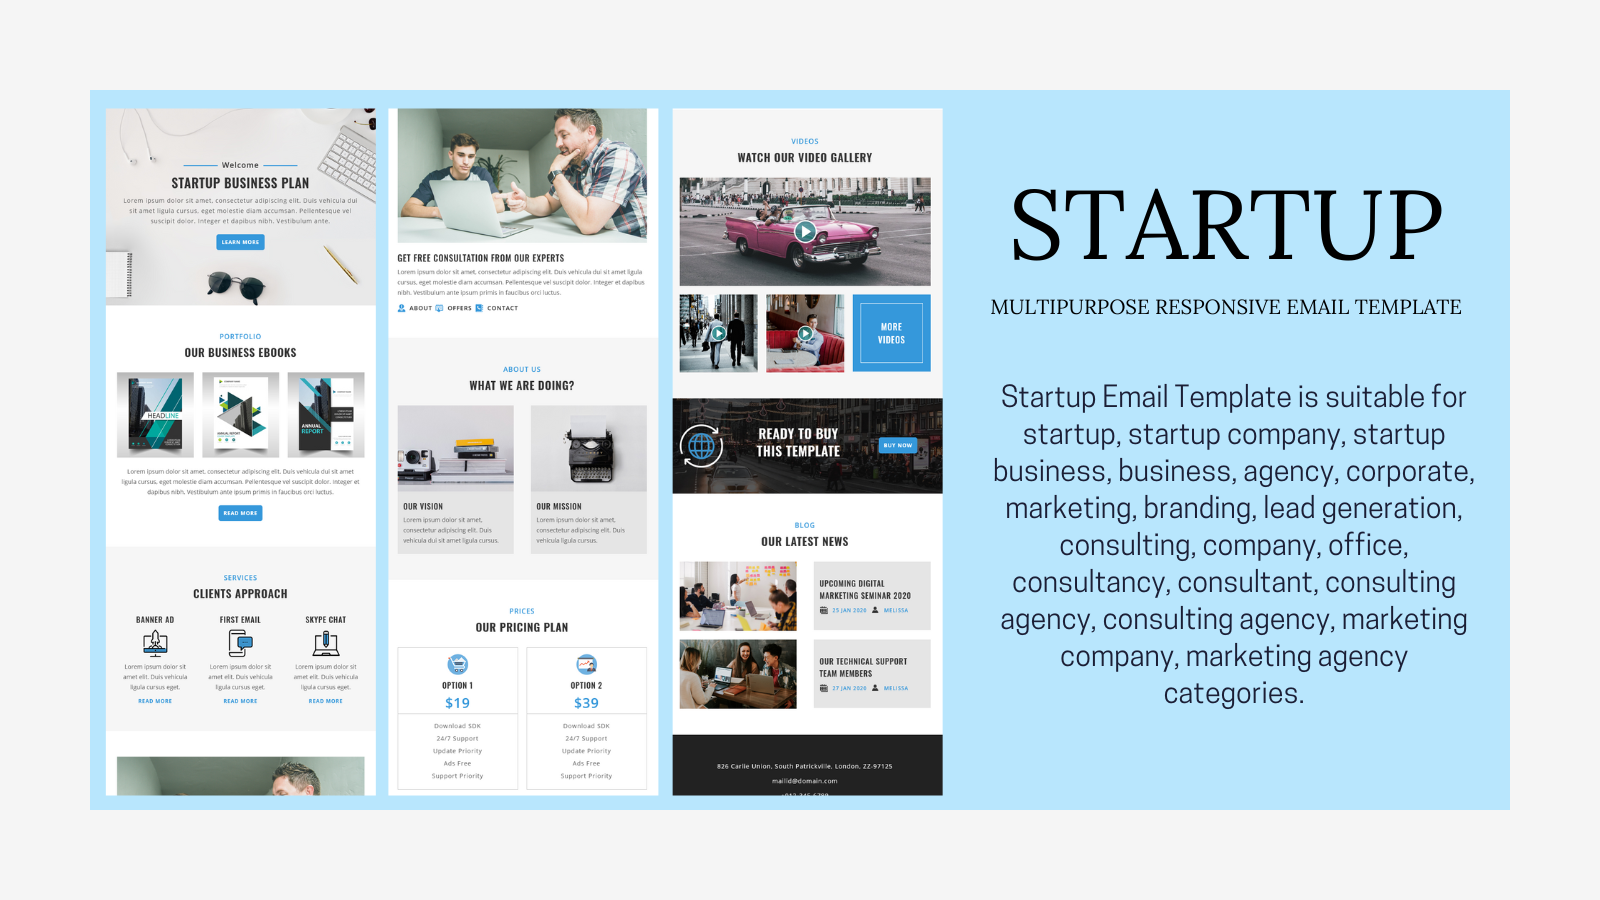 Startup – Multipurpose Responsive Email Template